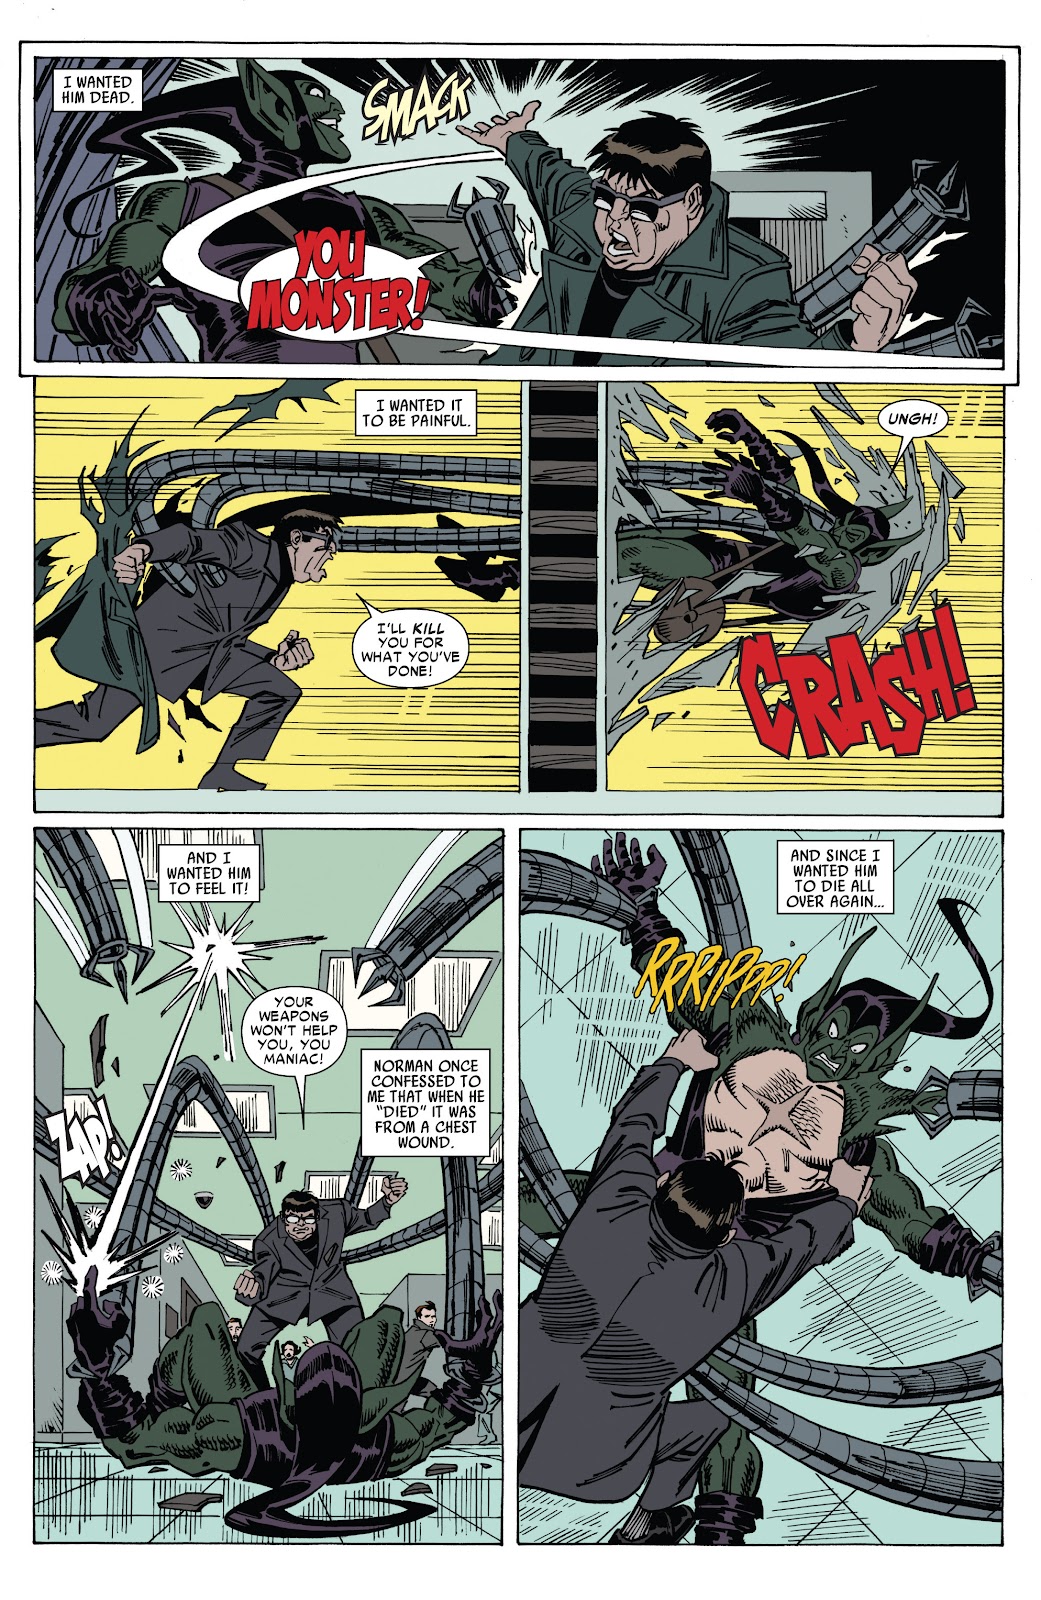 Superior Spider-Man Team-Up issue 12 - Page 5